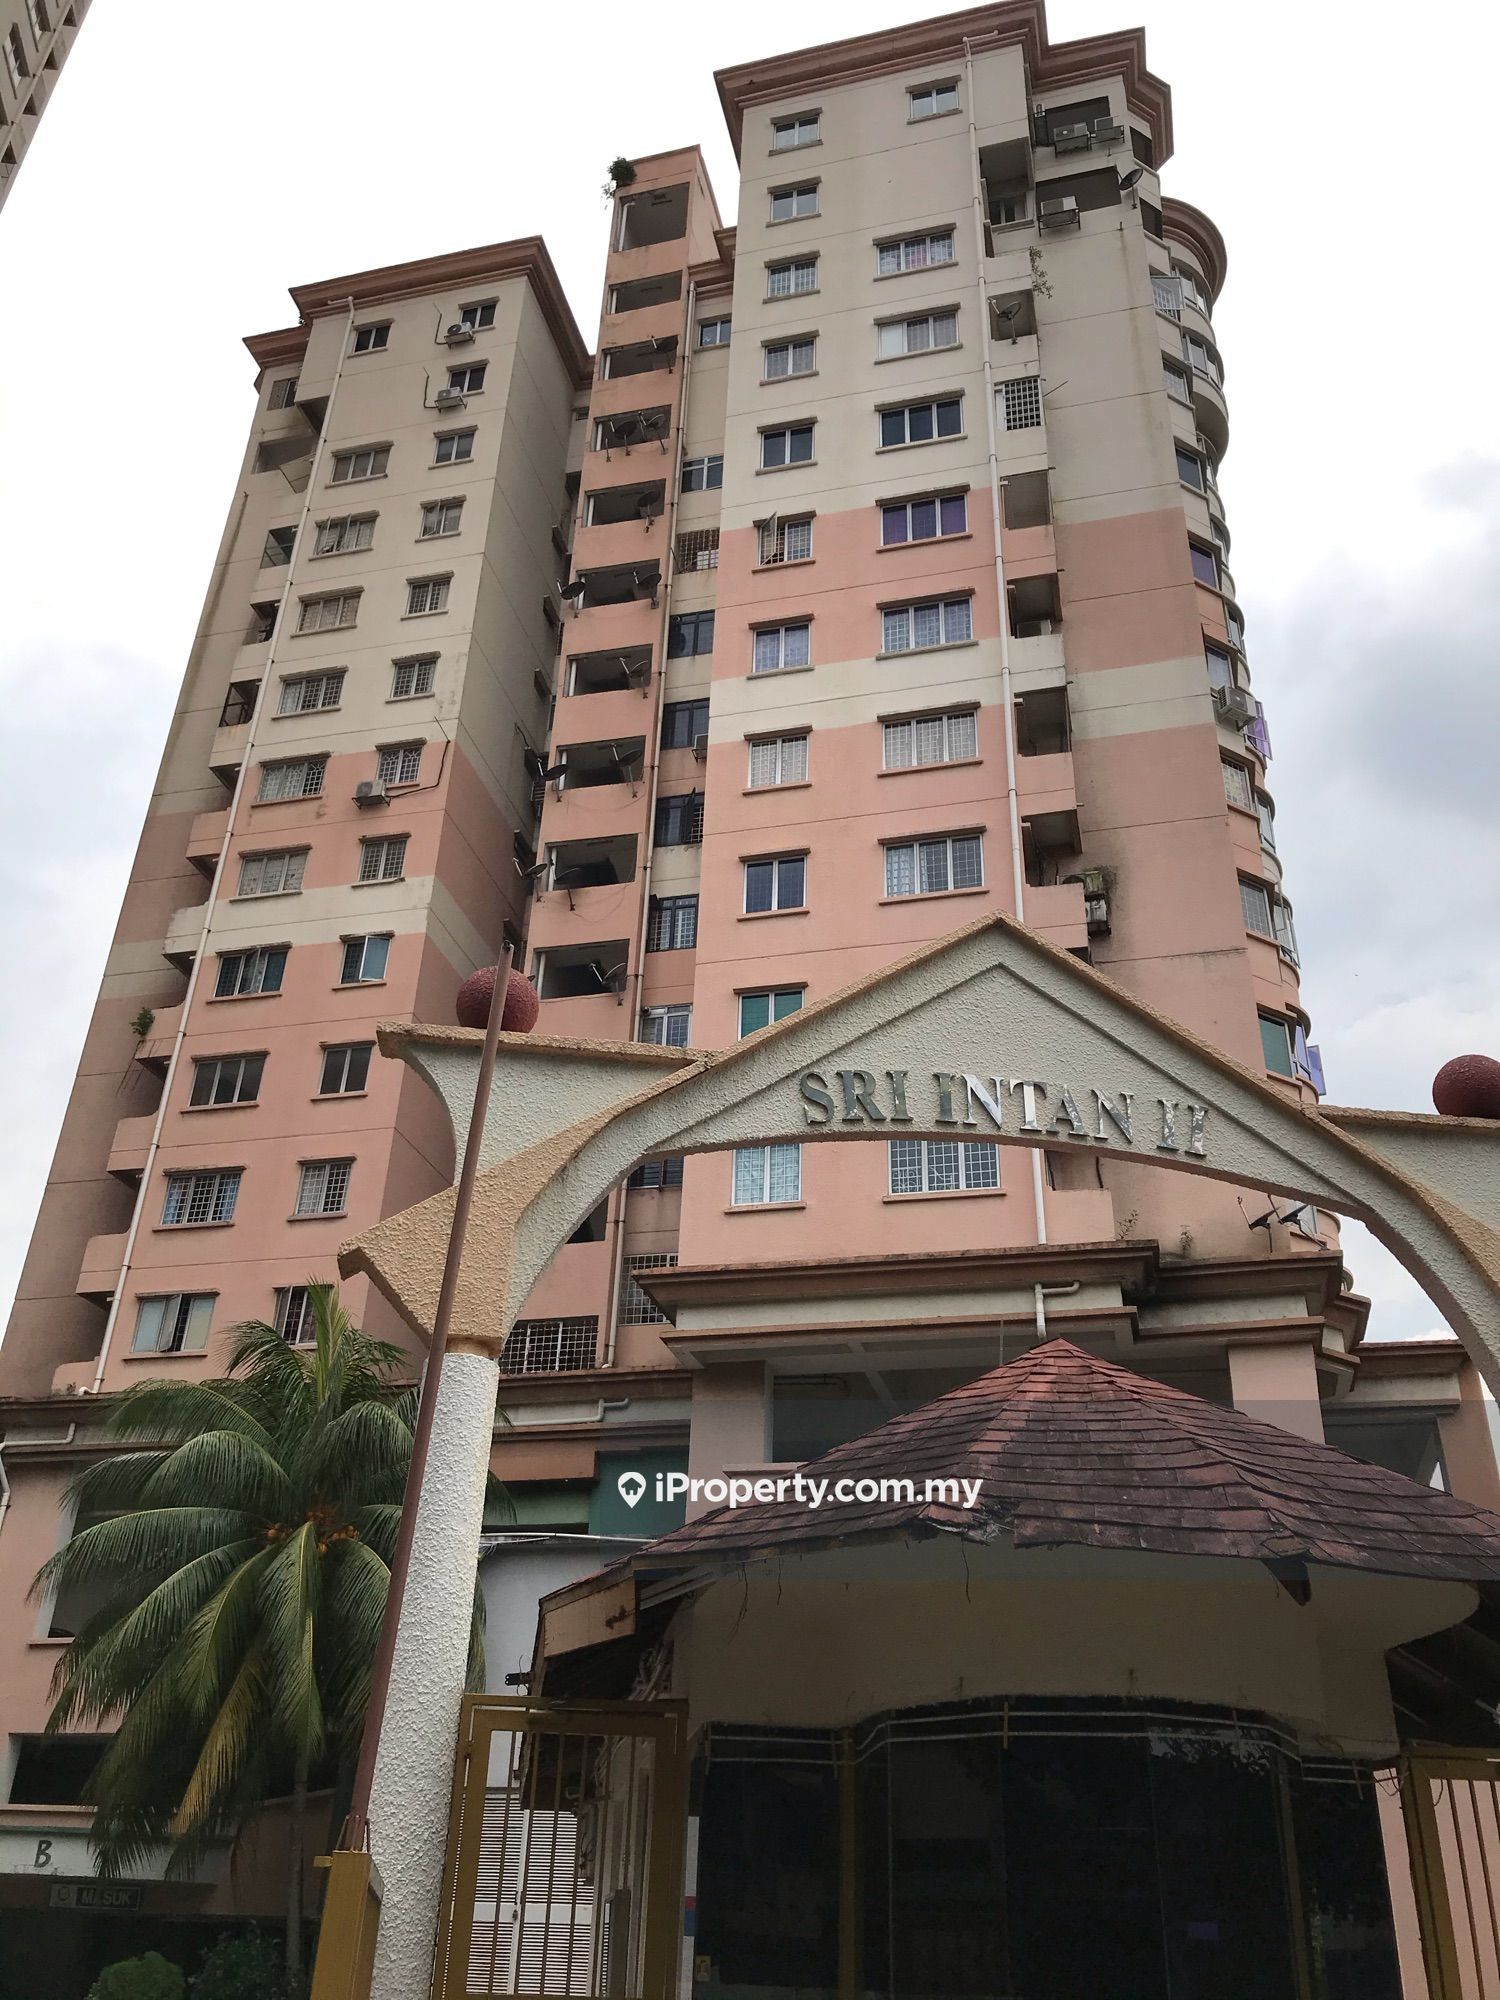 Sri Intan 1 Apartment 3 Bedrooms For Sale In Jalan Kuching Kuala Lumpur Iproperty Com My